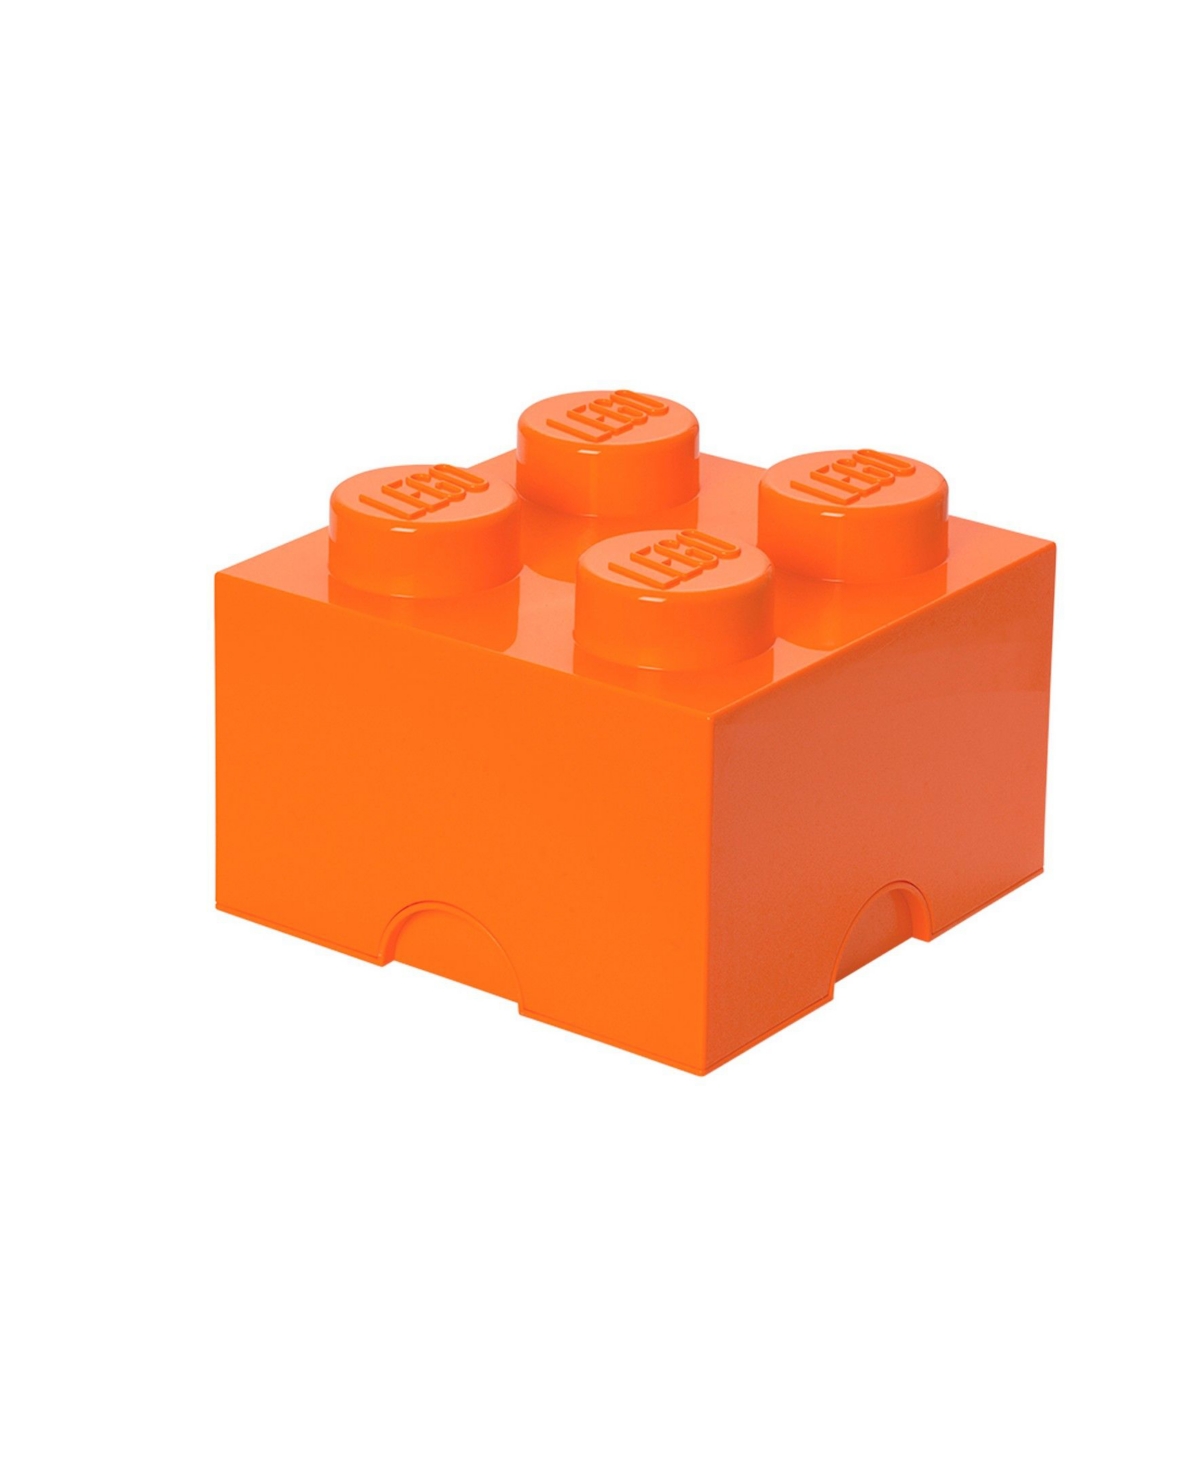 Lego Storage Brick With 4 Knobs In Orange